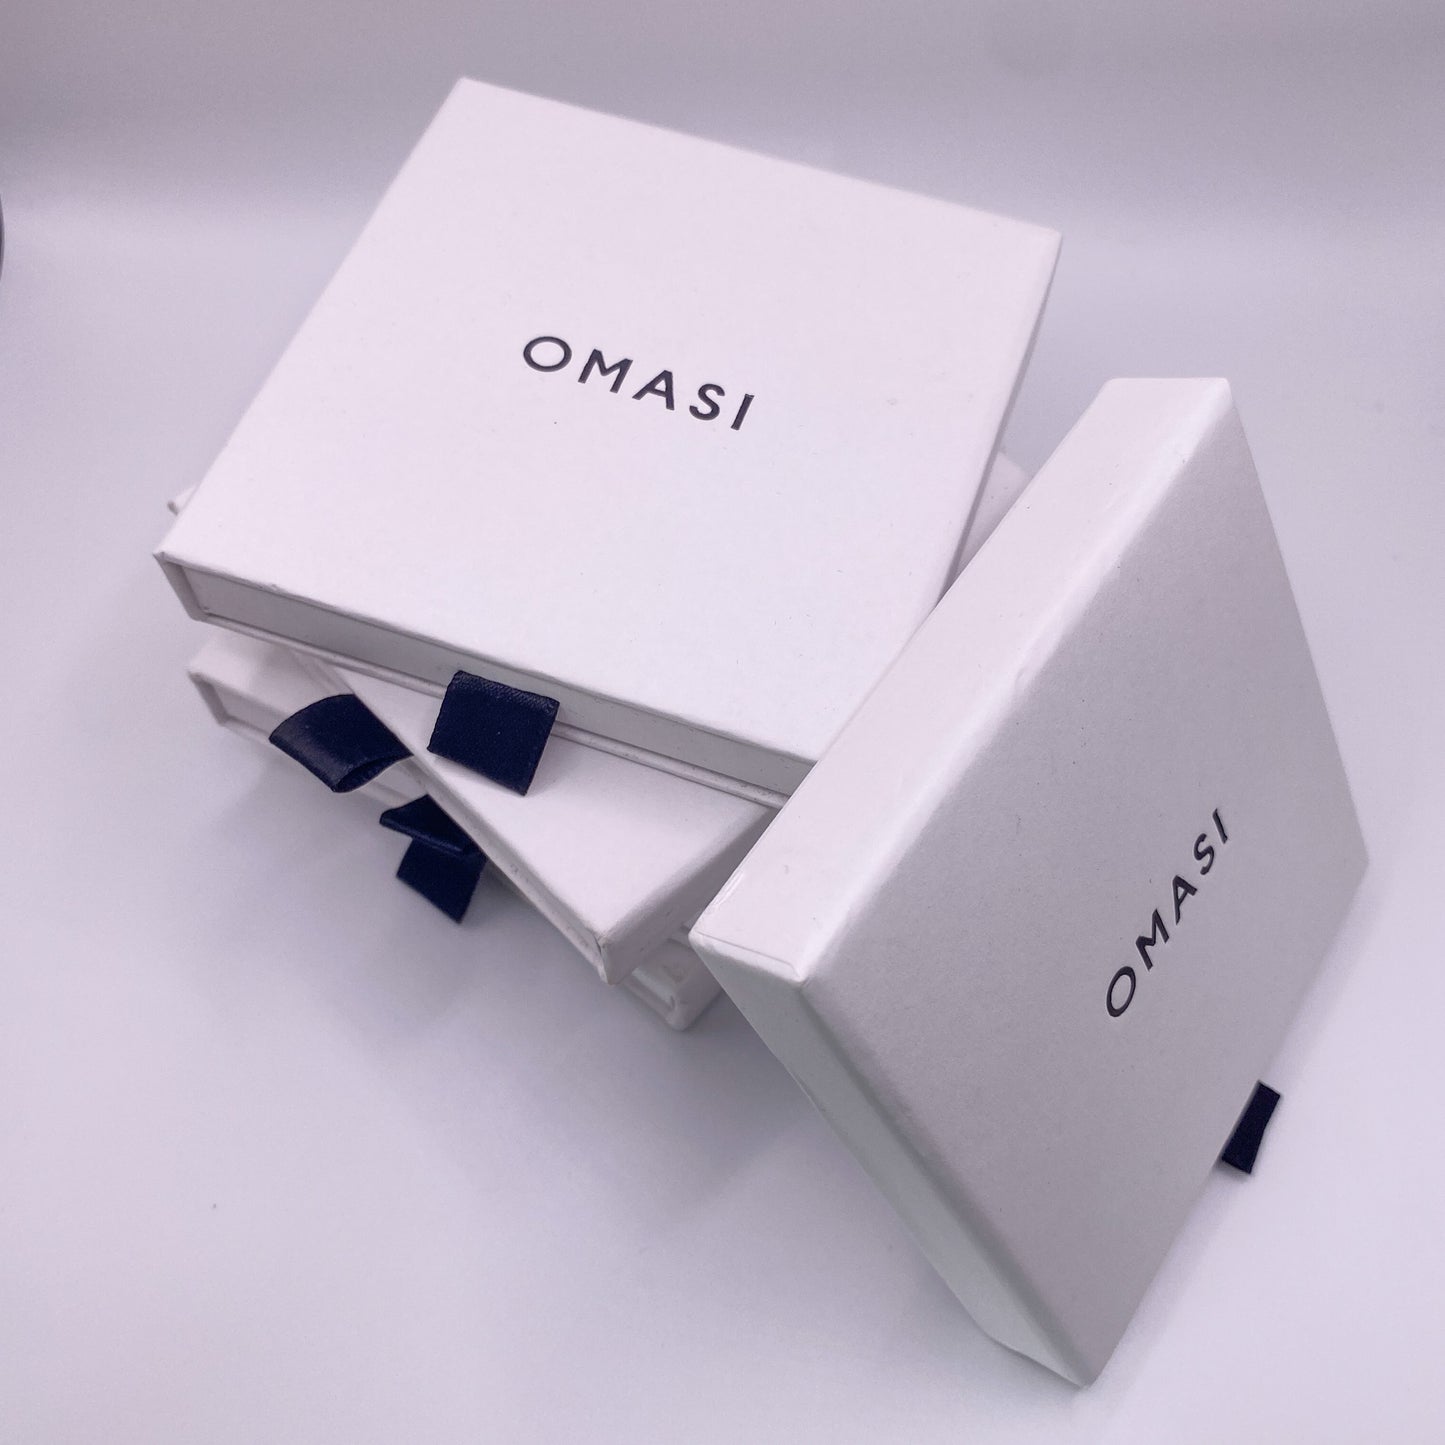 Extra Omasi jewelry box